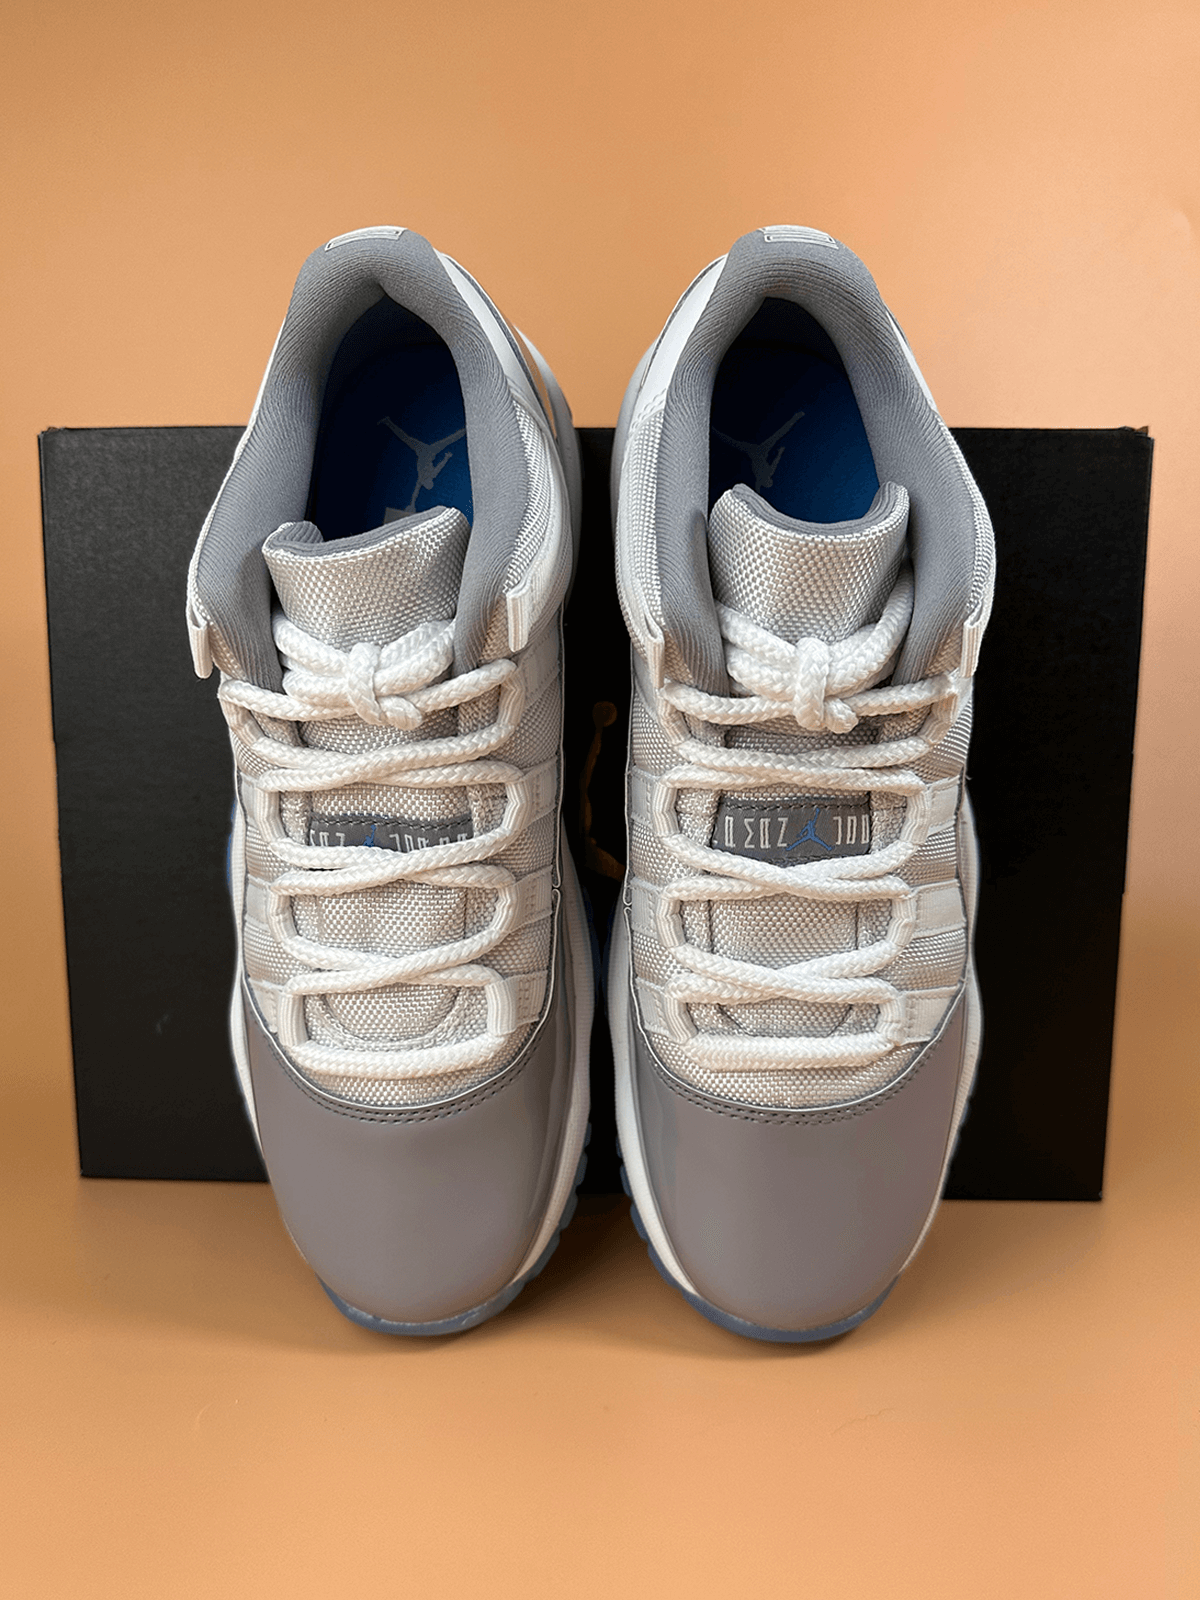 Jordan 11 Low Cement Grey